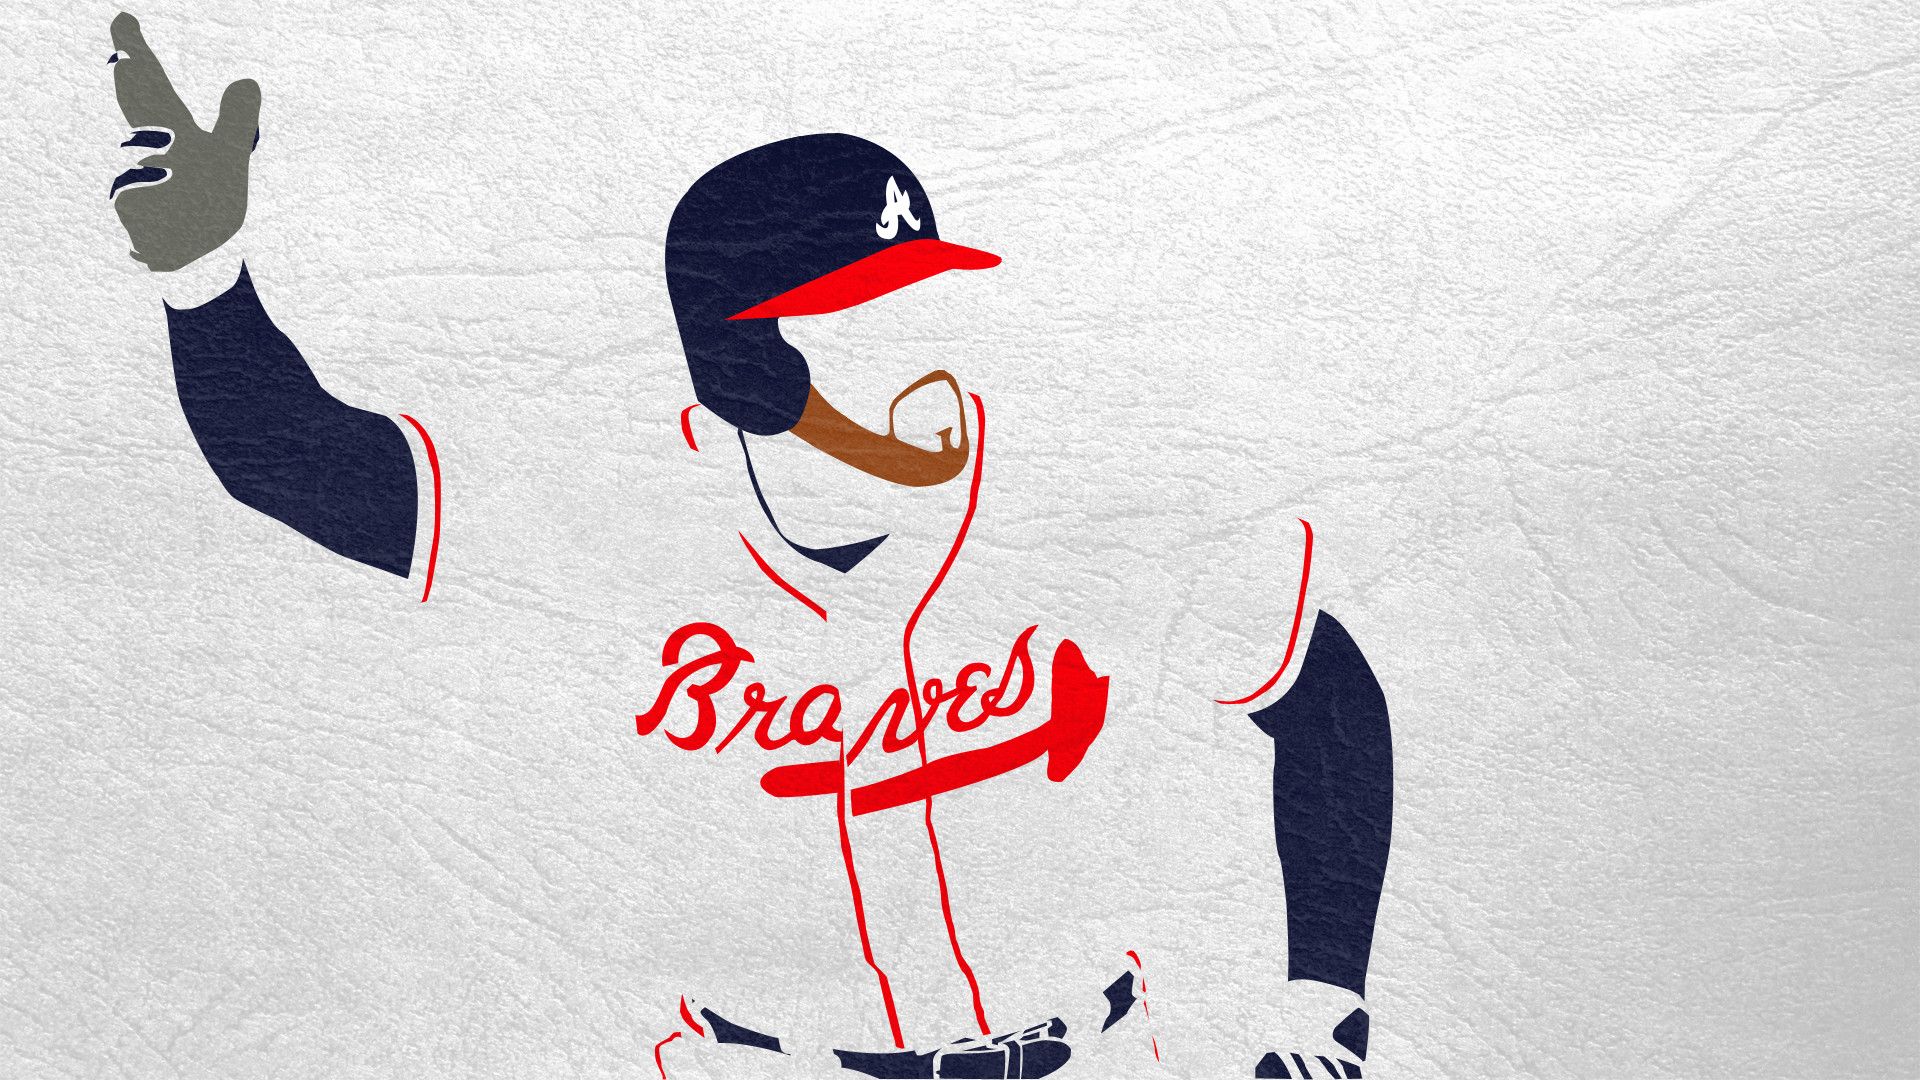 Atlanta Braves Desktop Wallpaper